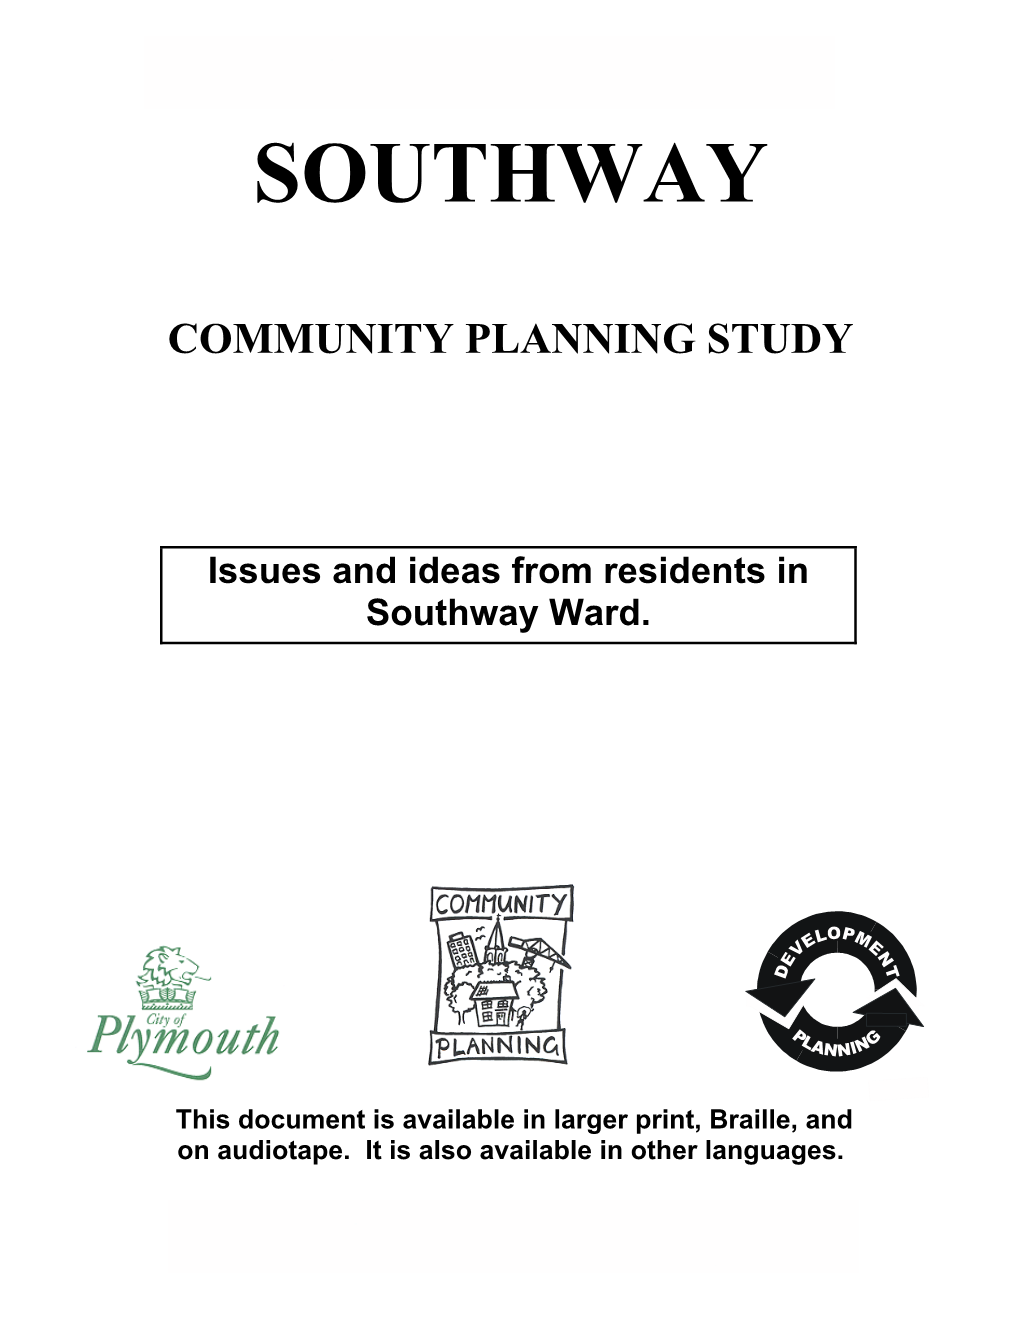 Community Planning Study: Southway